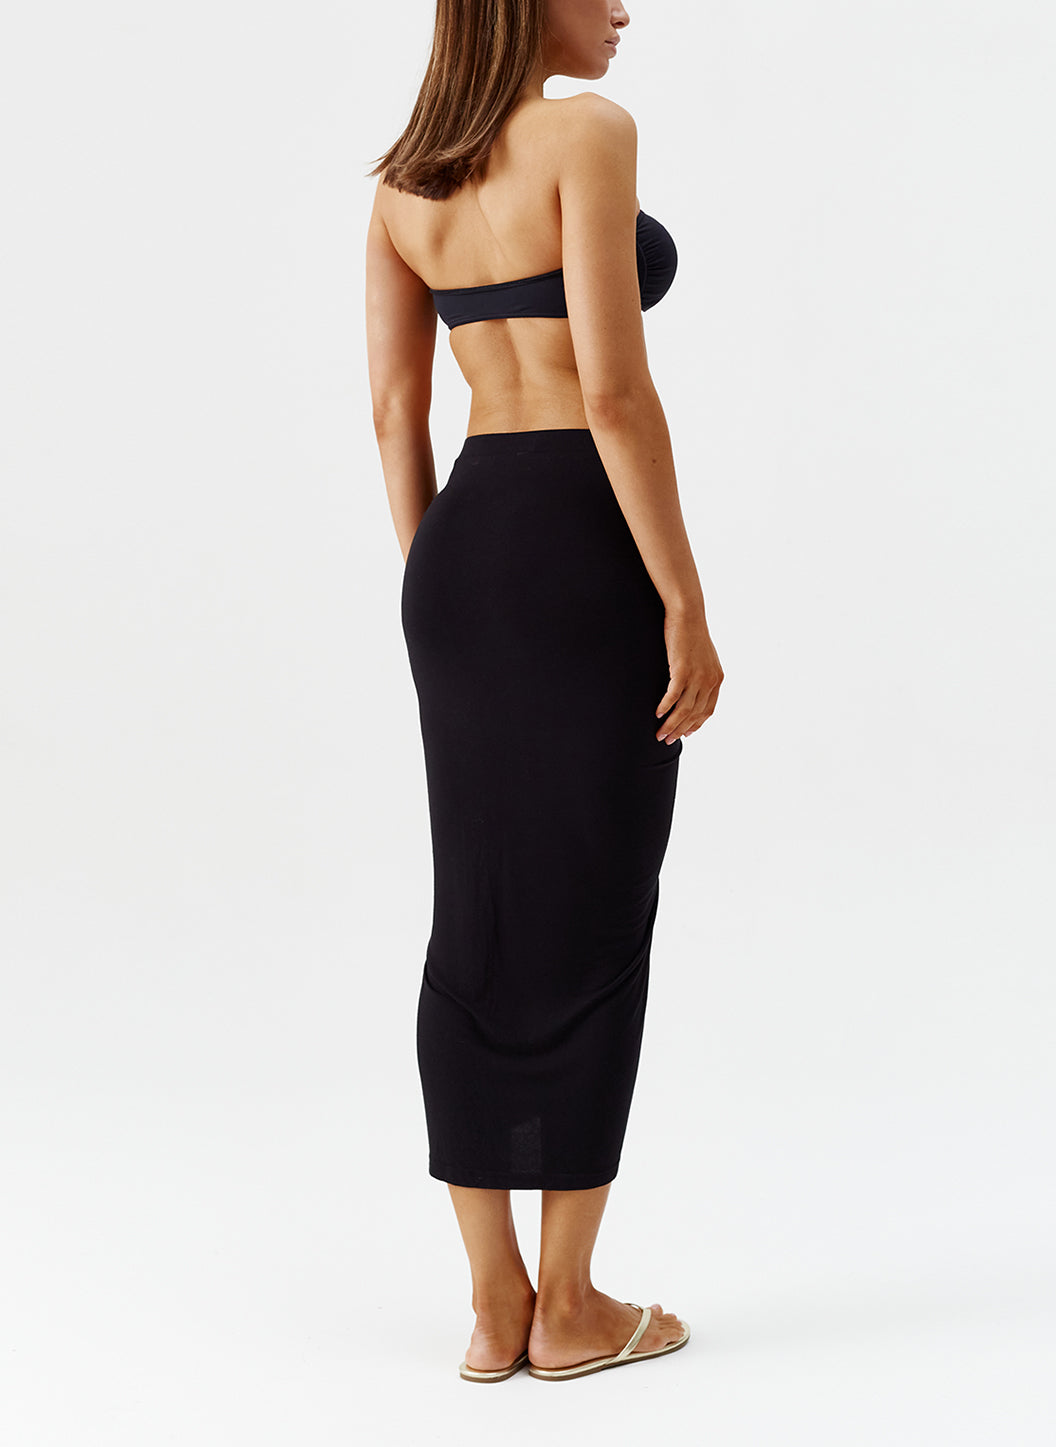 sasha-black-skirt_model_2024_B